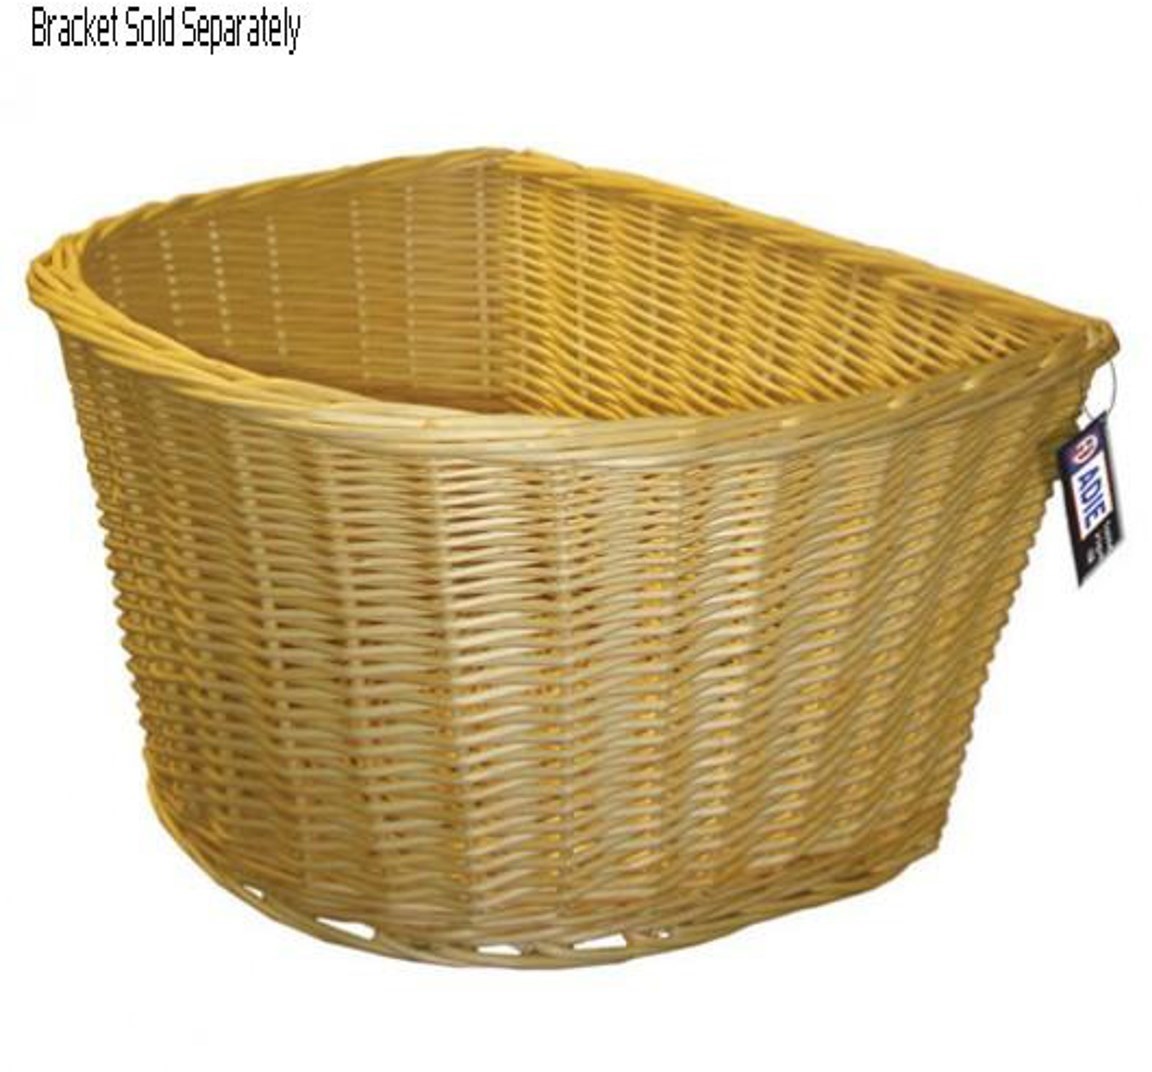 Adie D Shape Wicker Basket 18 inch product image